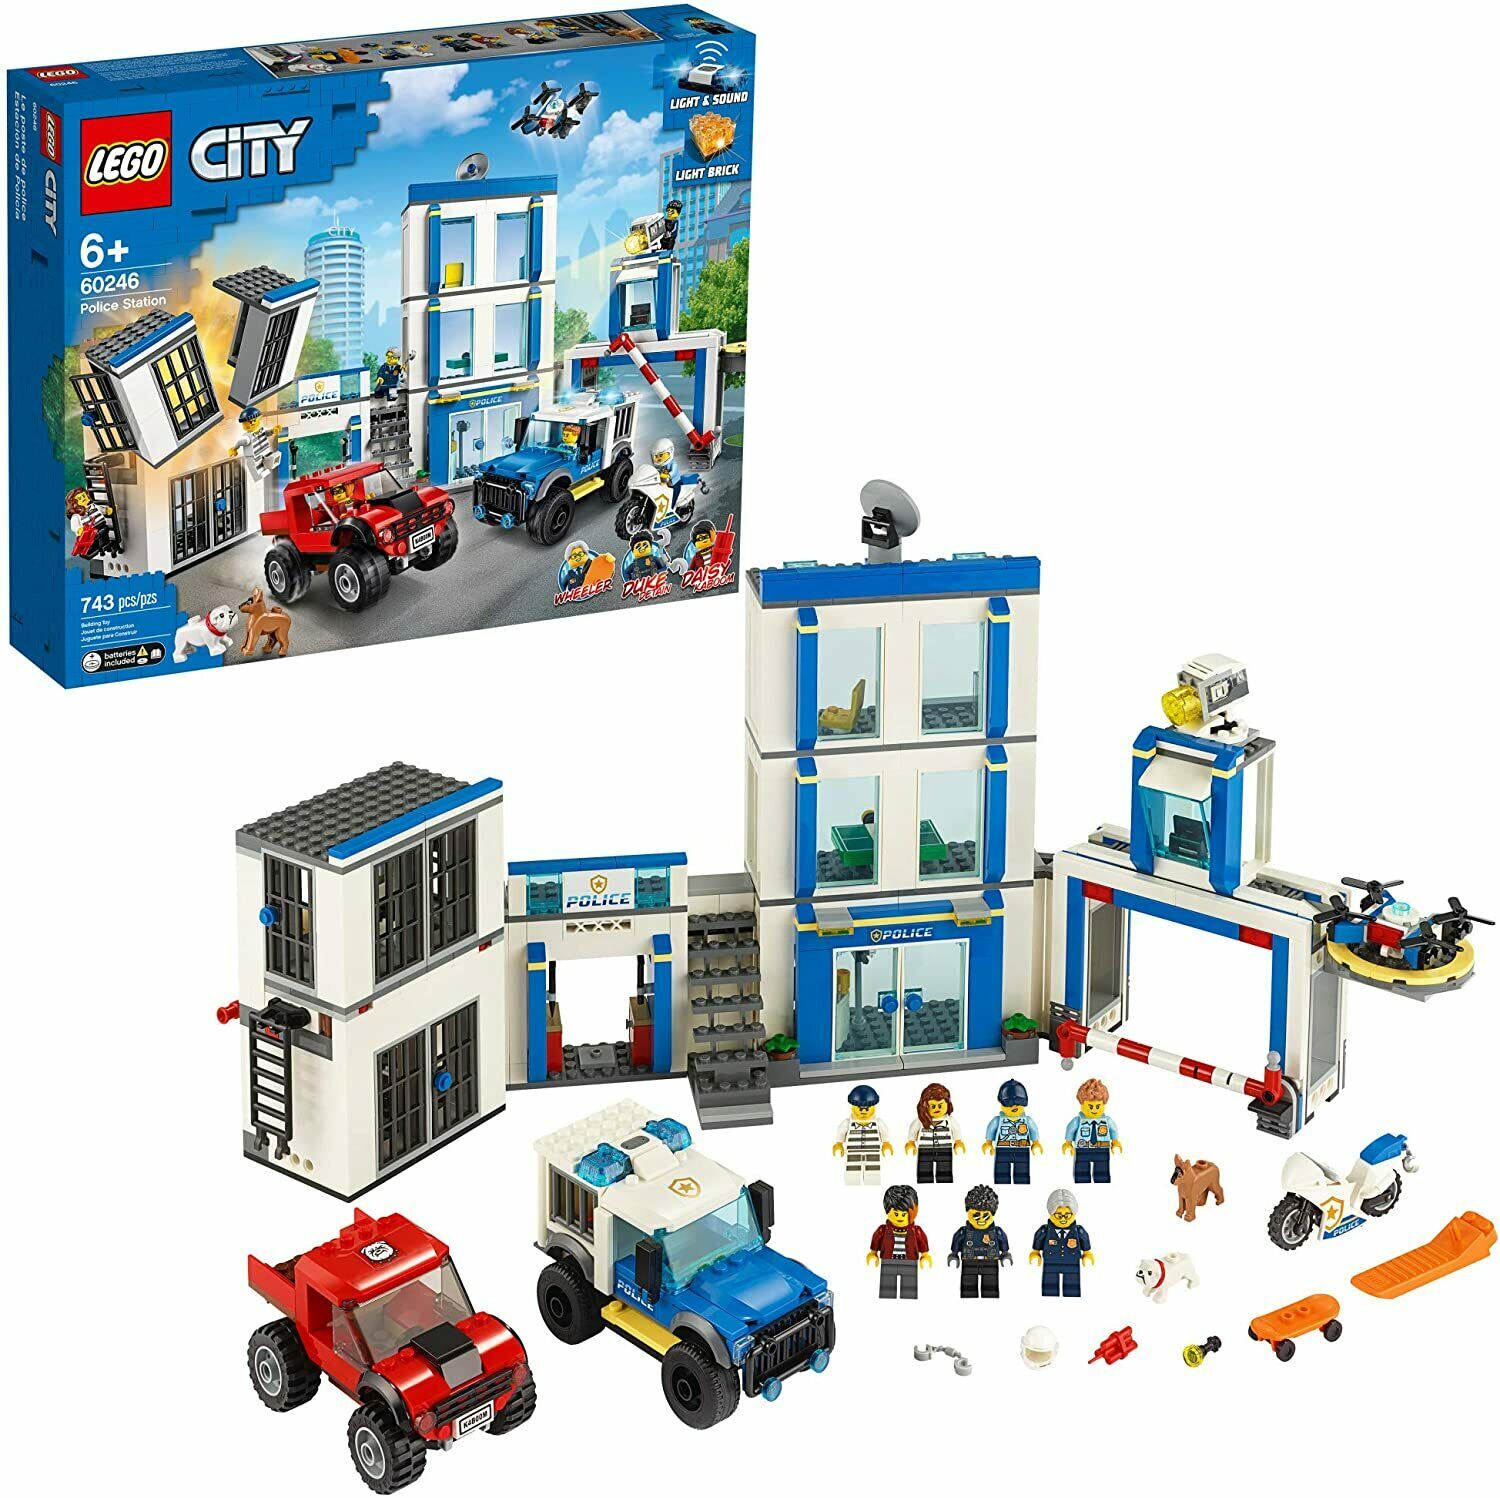 Lego City Police Station (60246) Building Kit 743 Pcs Playset Retired Set